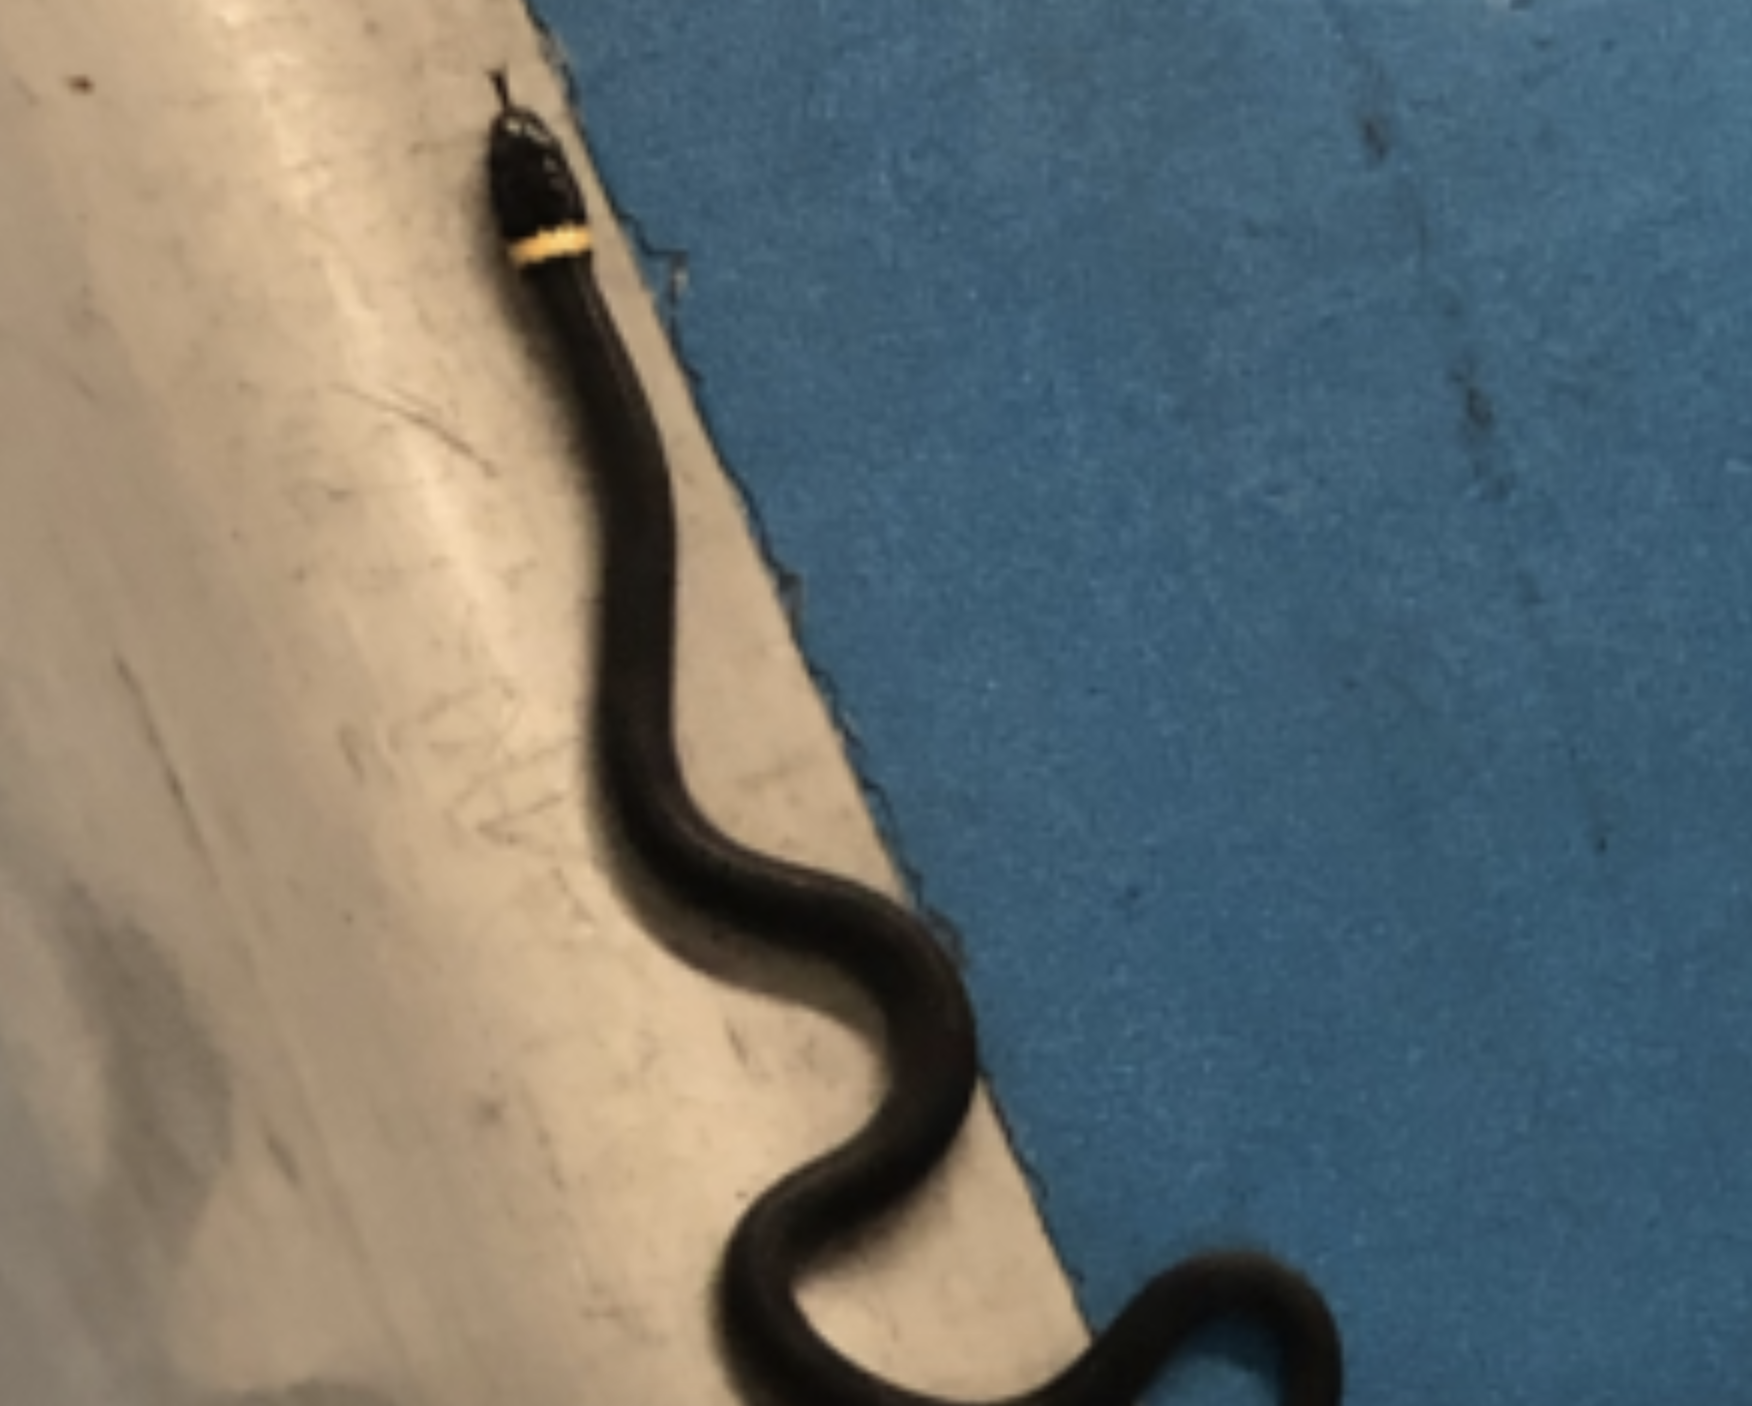 Passenger Leaves A 15-Inch Snake Behind At TSA Checkpoint